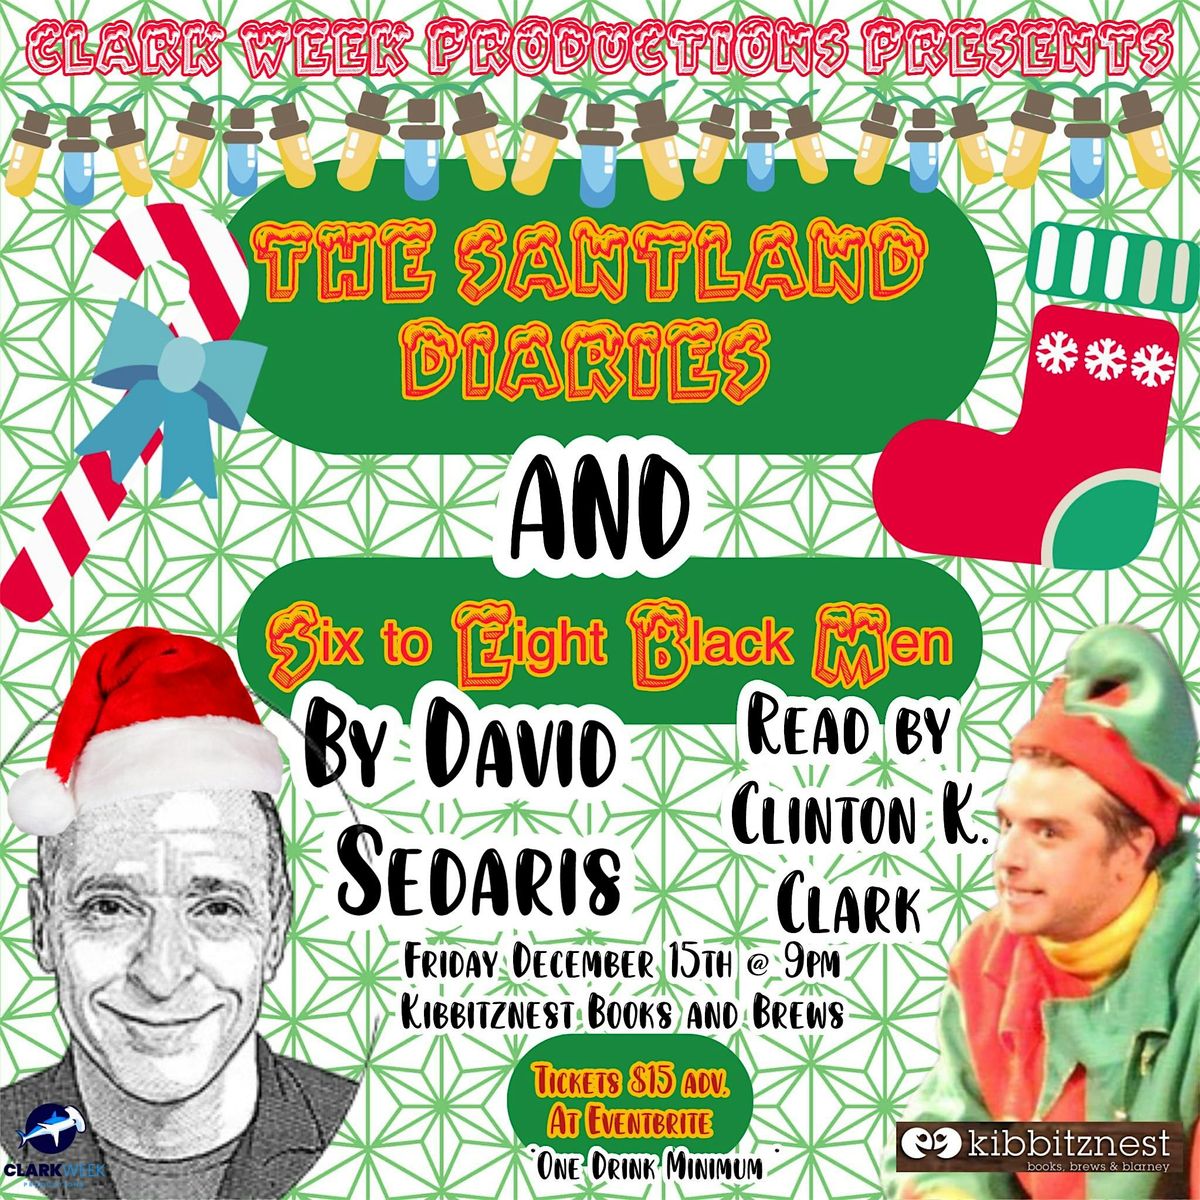 Santaland Diaries by David Sedaris kibbitznest books, brews & blarney